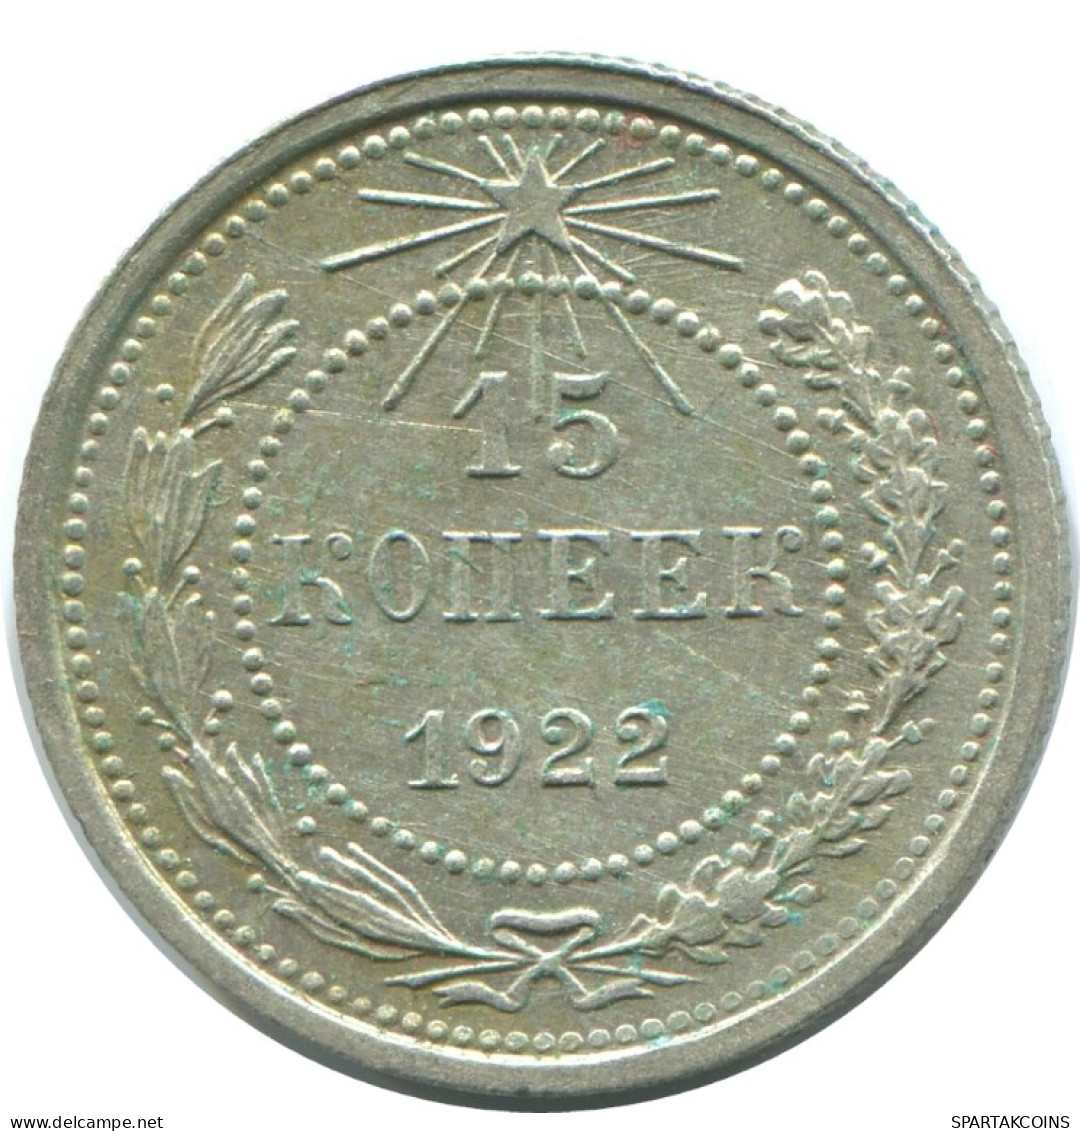 15 KOPEKS 1922 RUSSIA RSFSR SILVER Coin HIGH GRADE #AF250.4.U.A - Russie